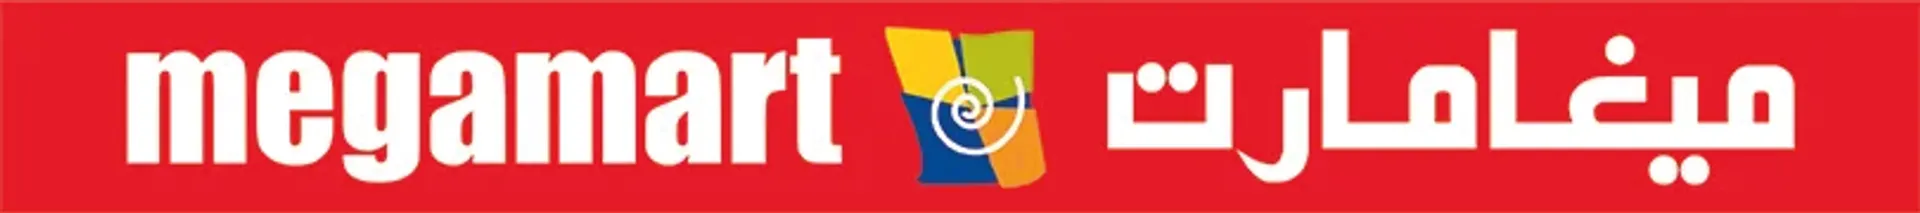 MEGAMART logo. Current weekly ad